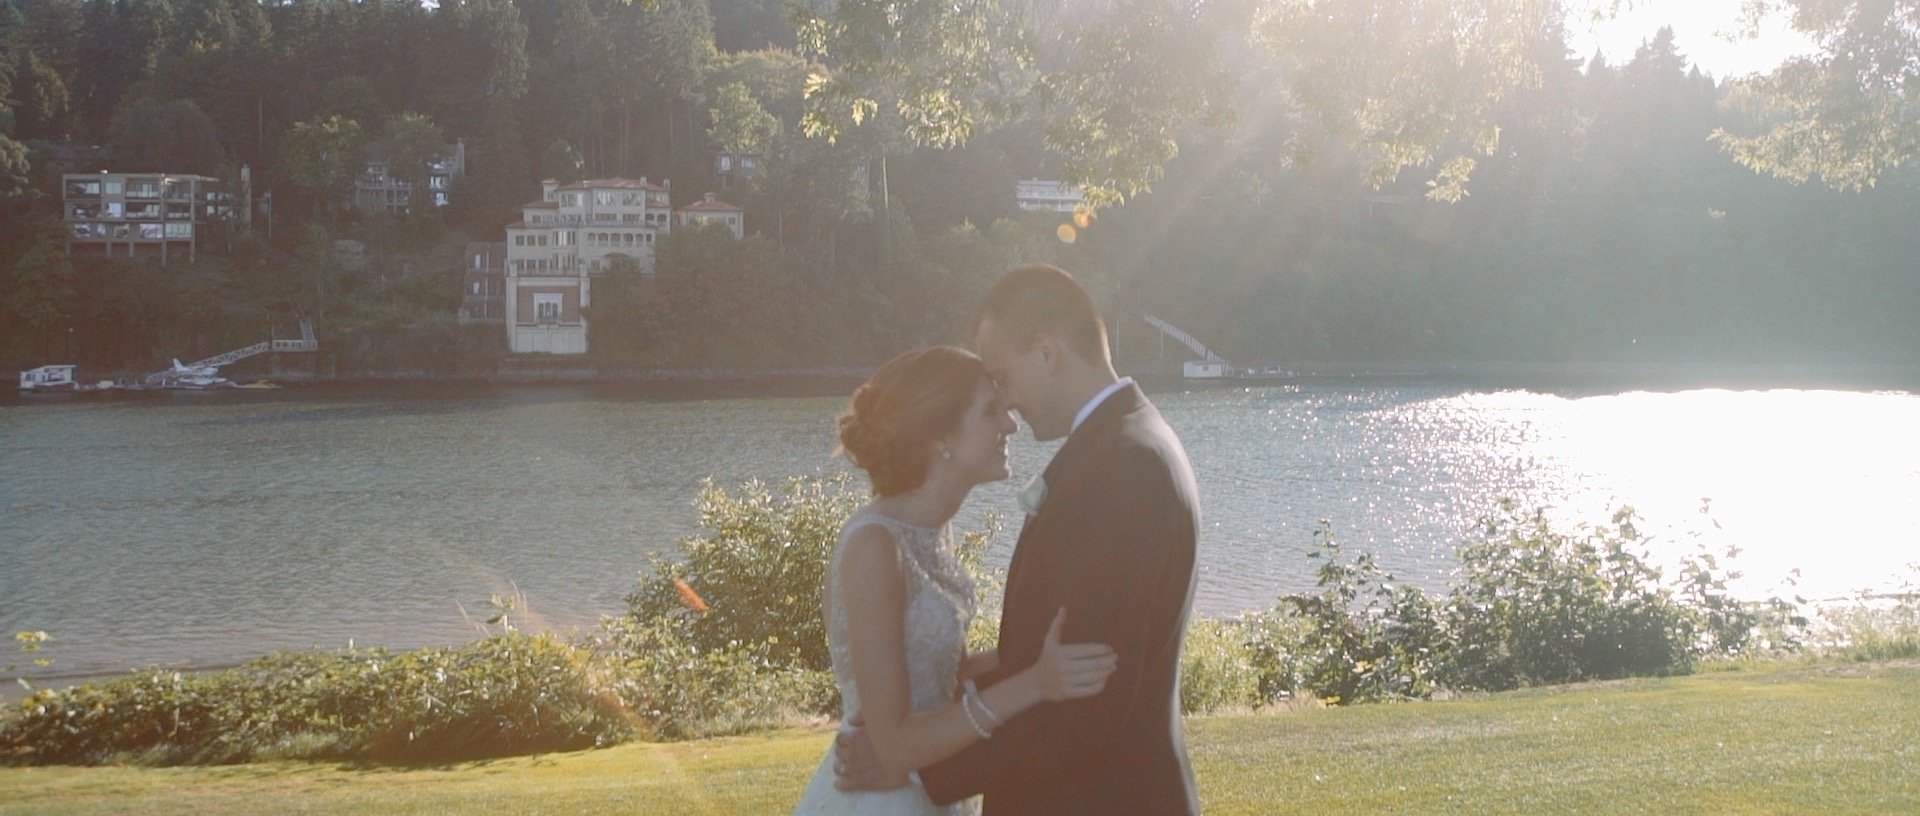 Waverley Country Club wedding videography